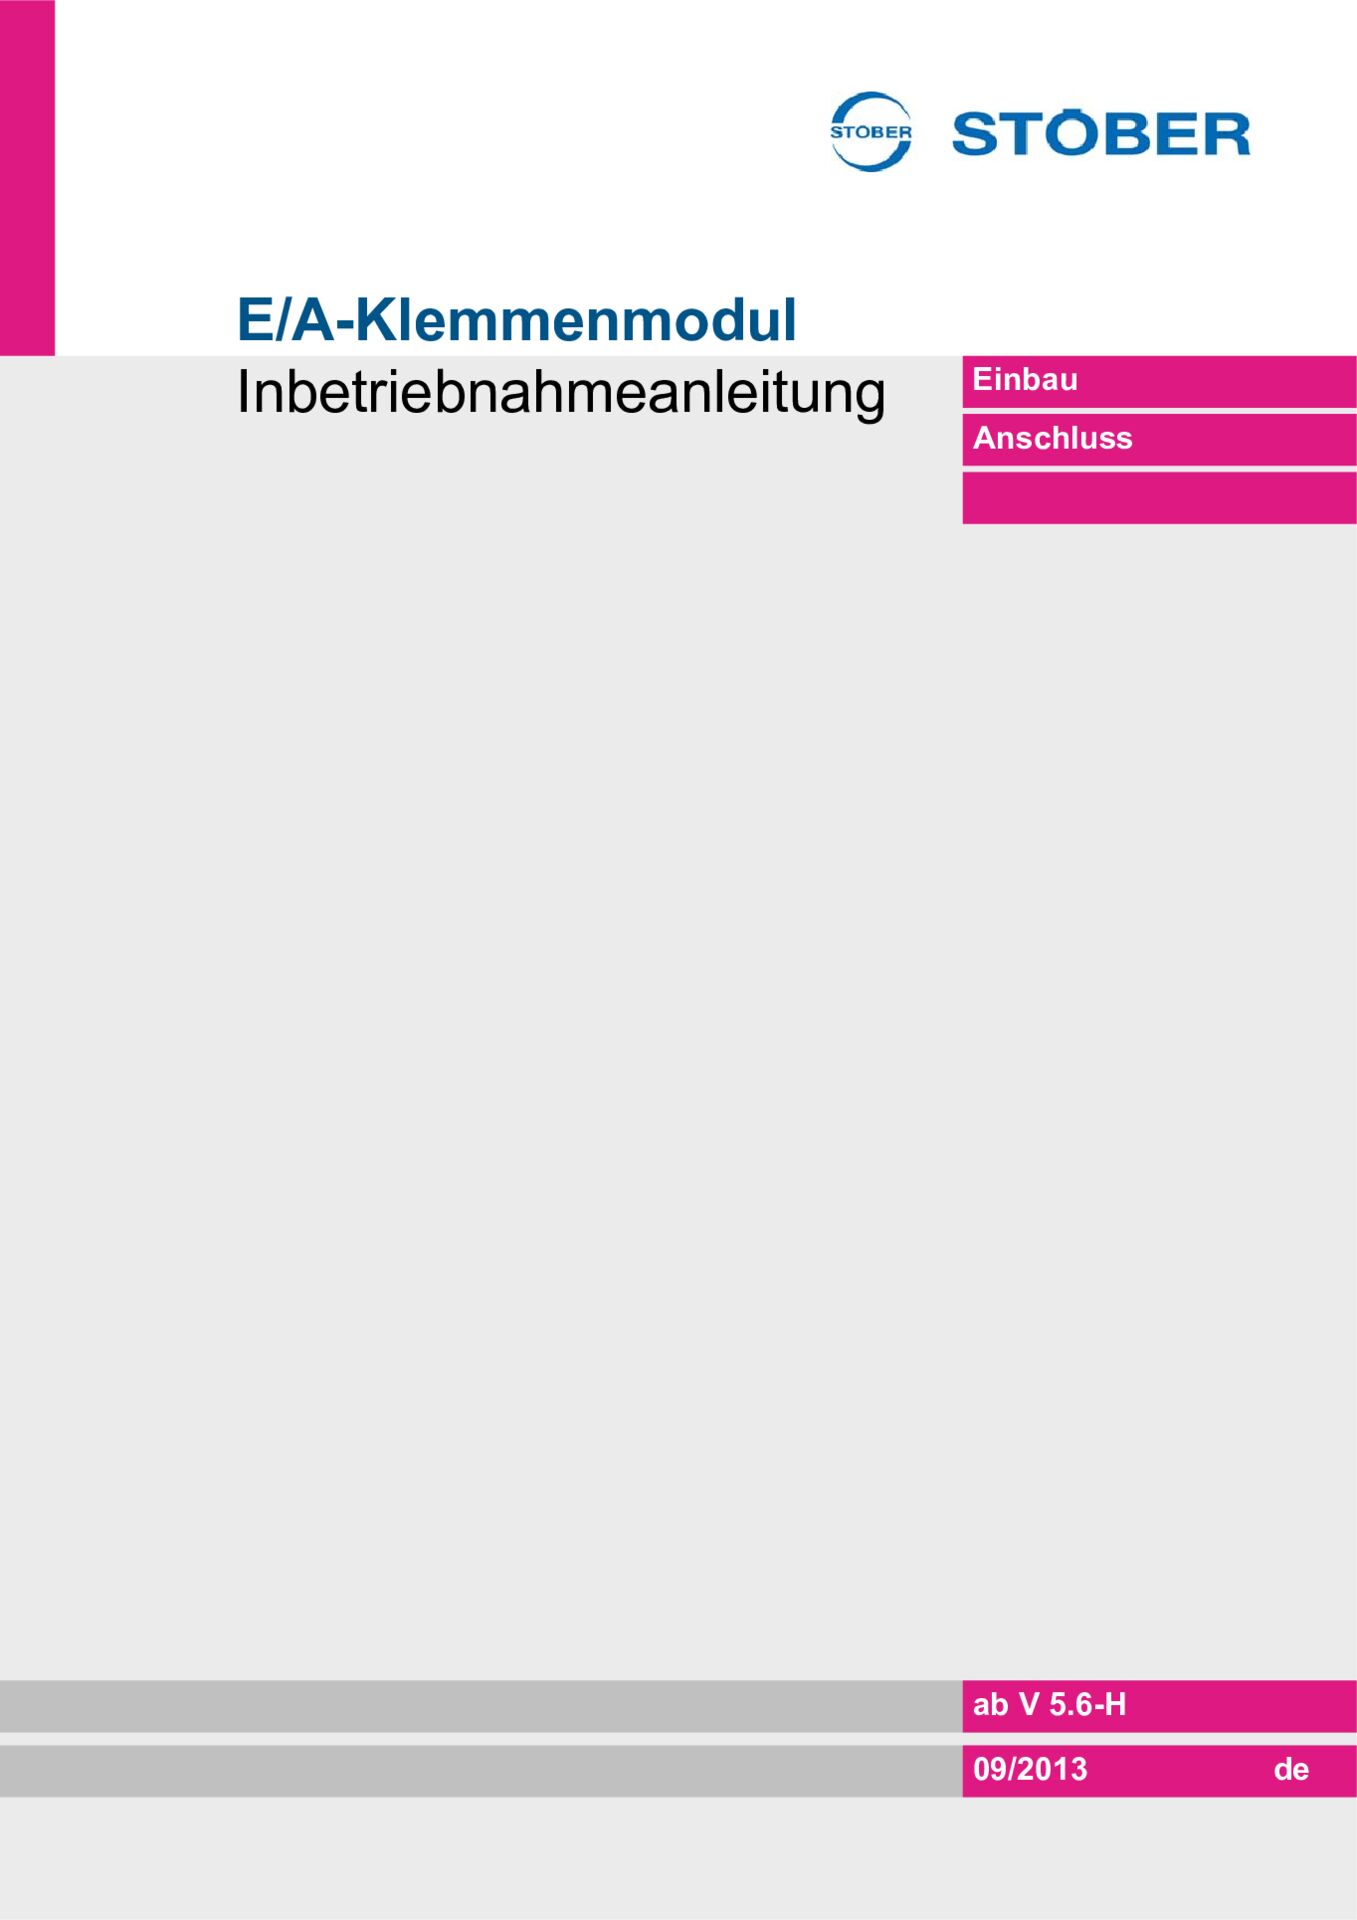 Inbetriebnahmeanleitung Klemmenmodul REA 5001 SEA 5001 und XEA 5001